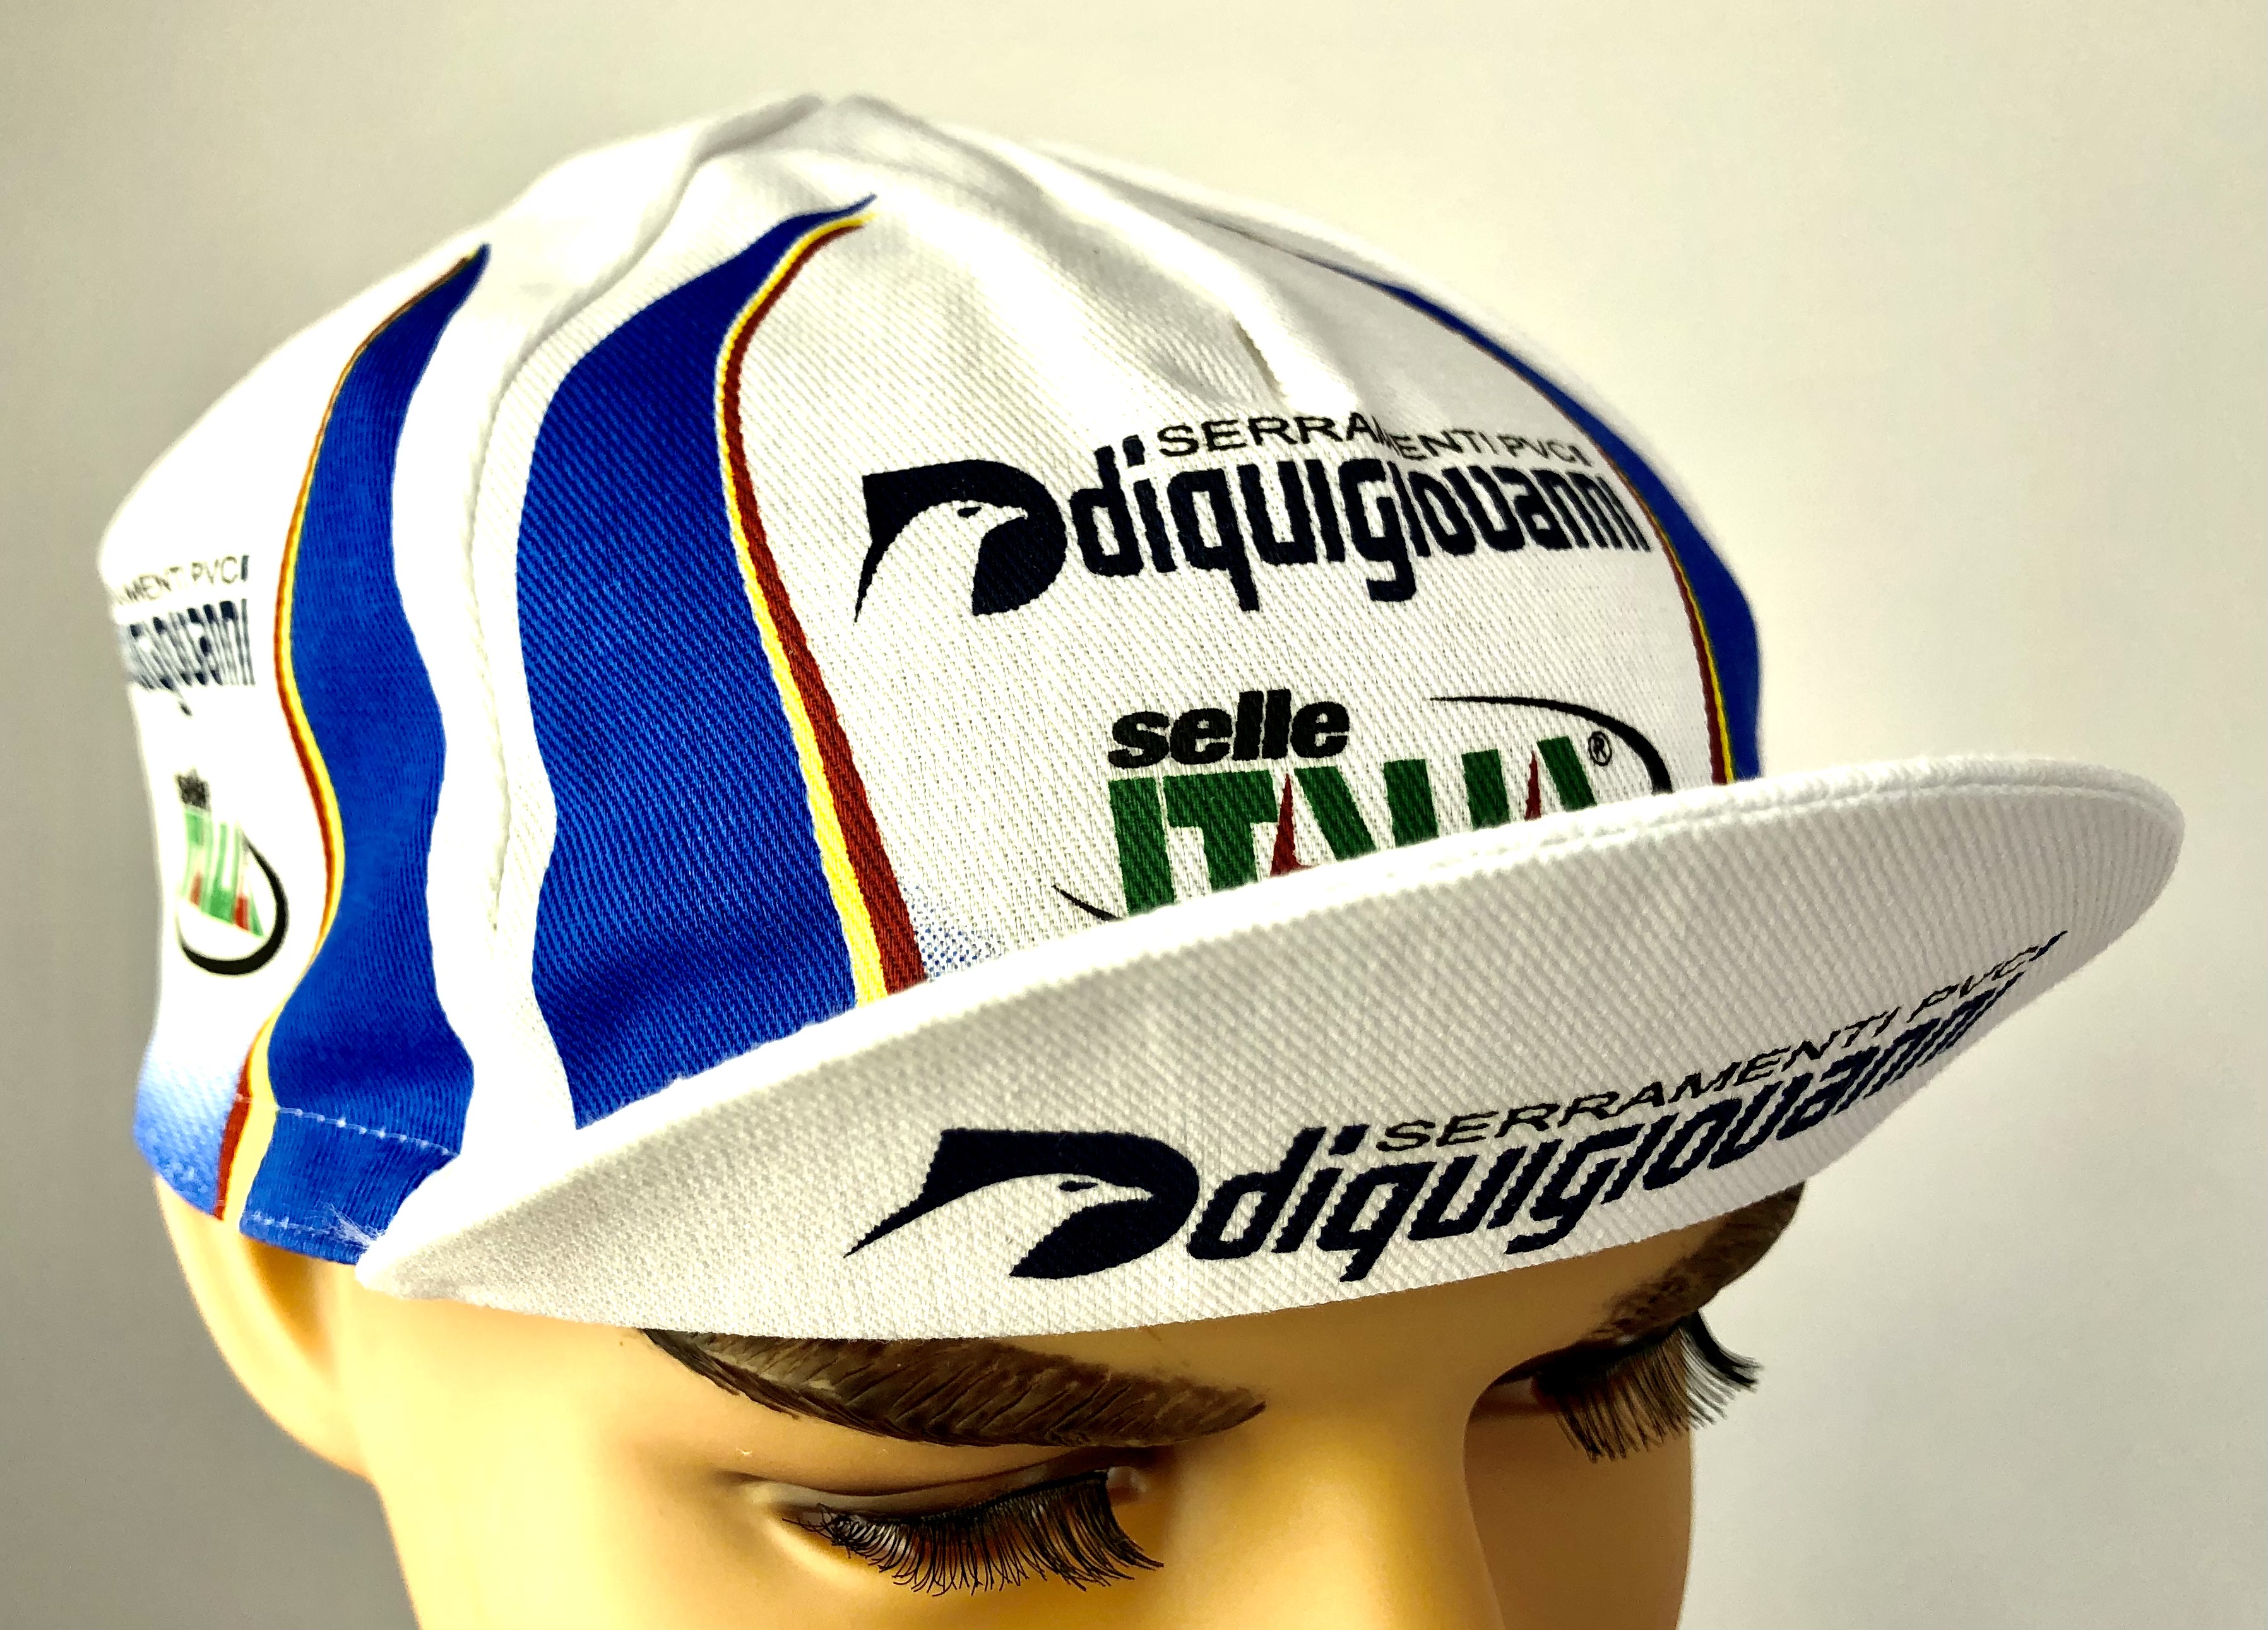 Cycling Cap Team Selle Italia Diquigiovanni